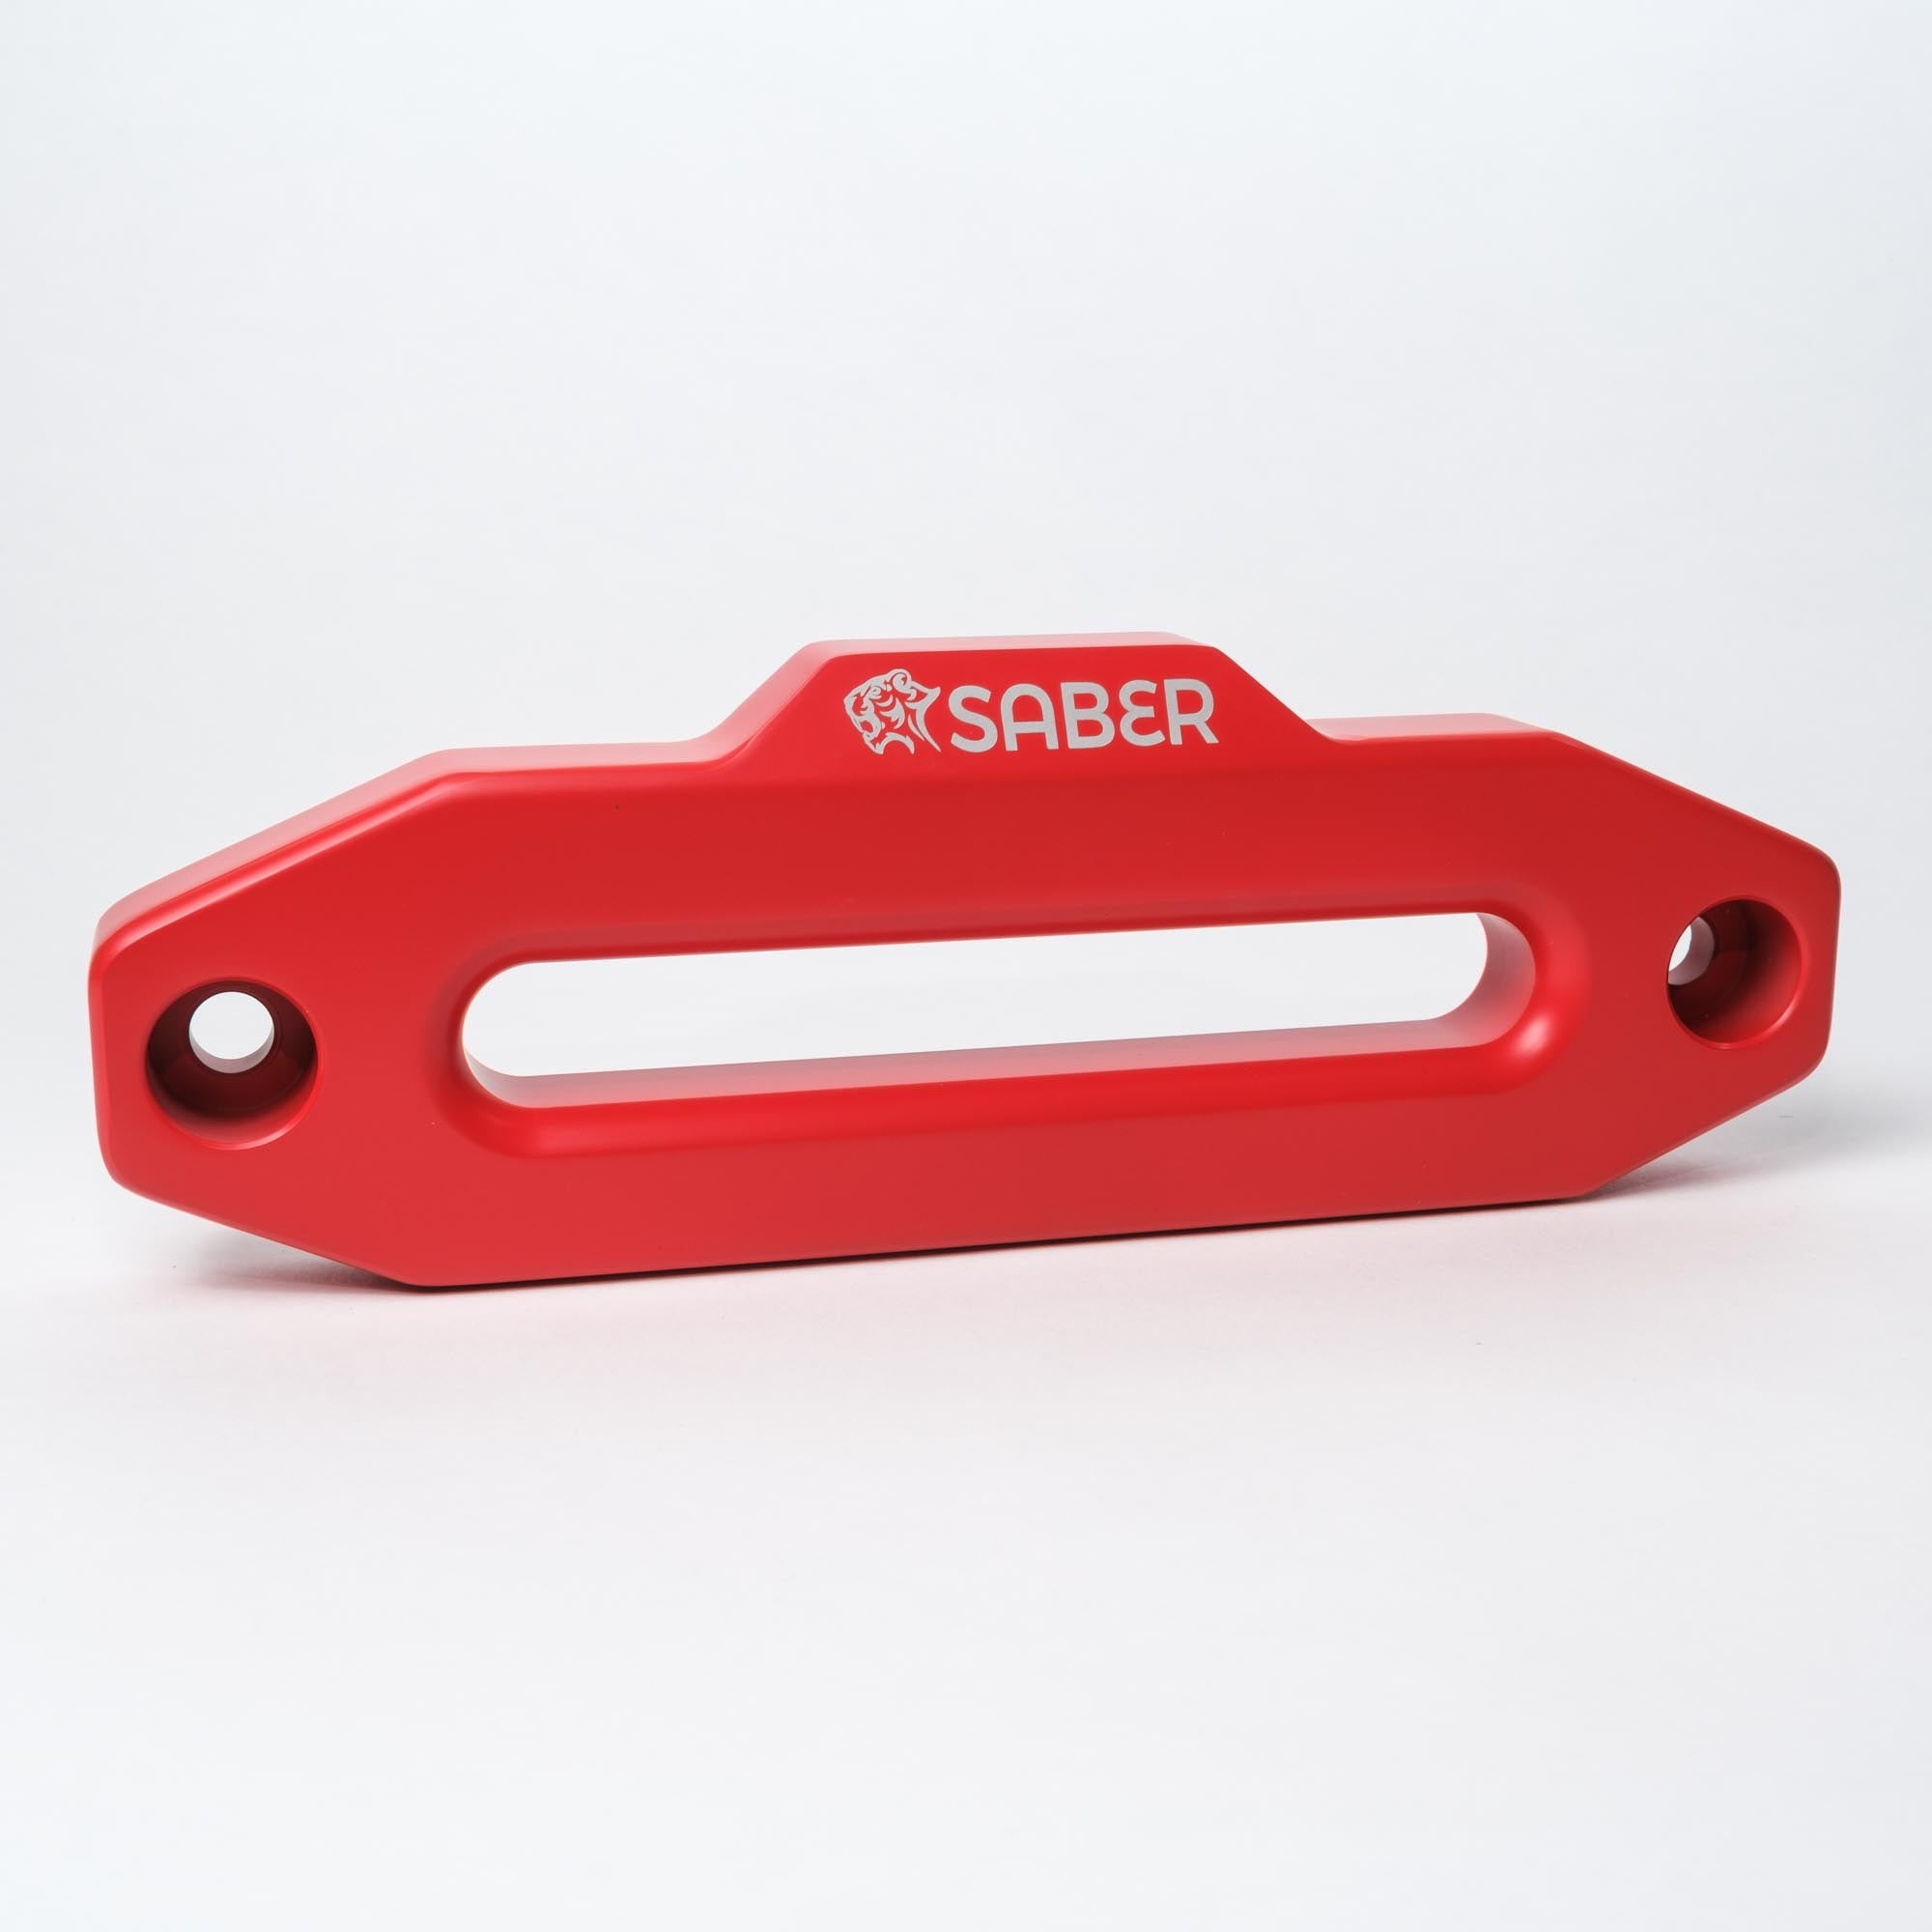 Saber Offroad 6061 Aluminium Hawse Fairlead - Cerakote Red | Saber Offroad